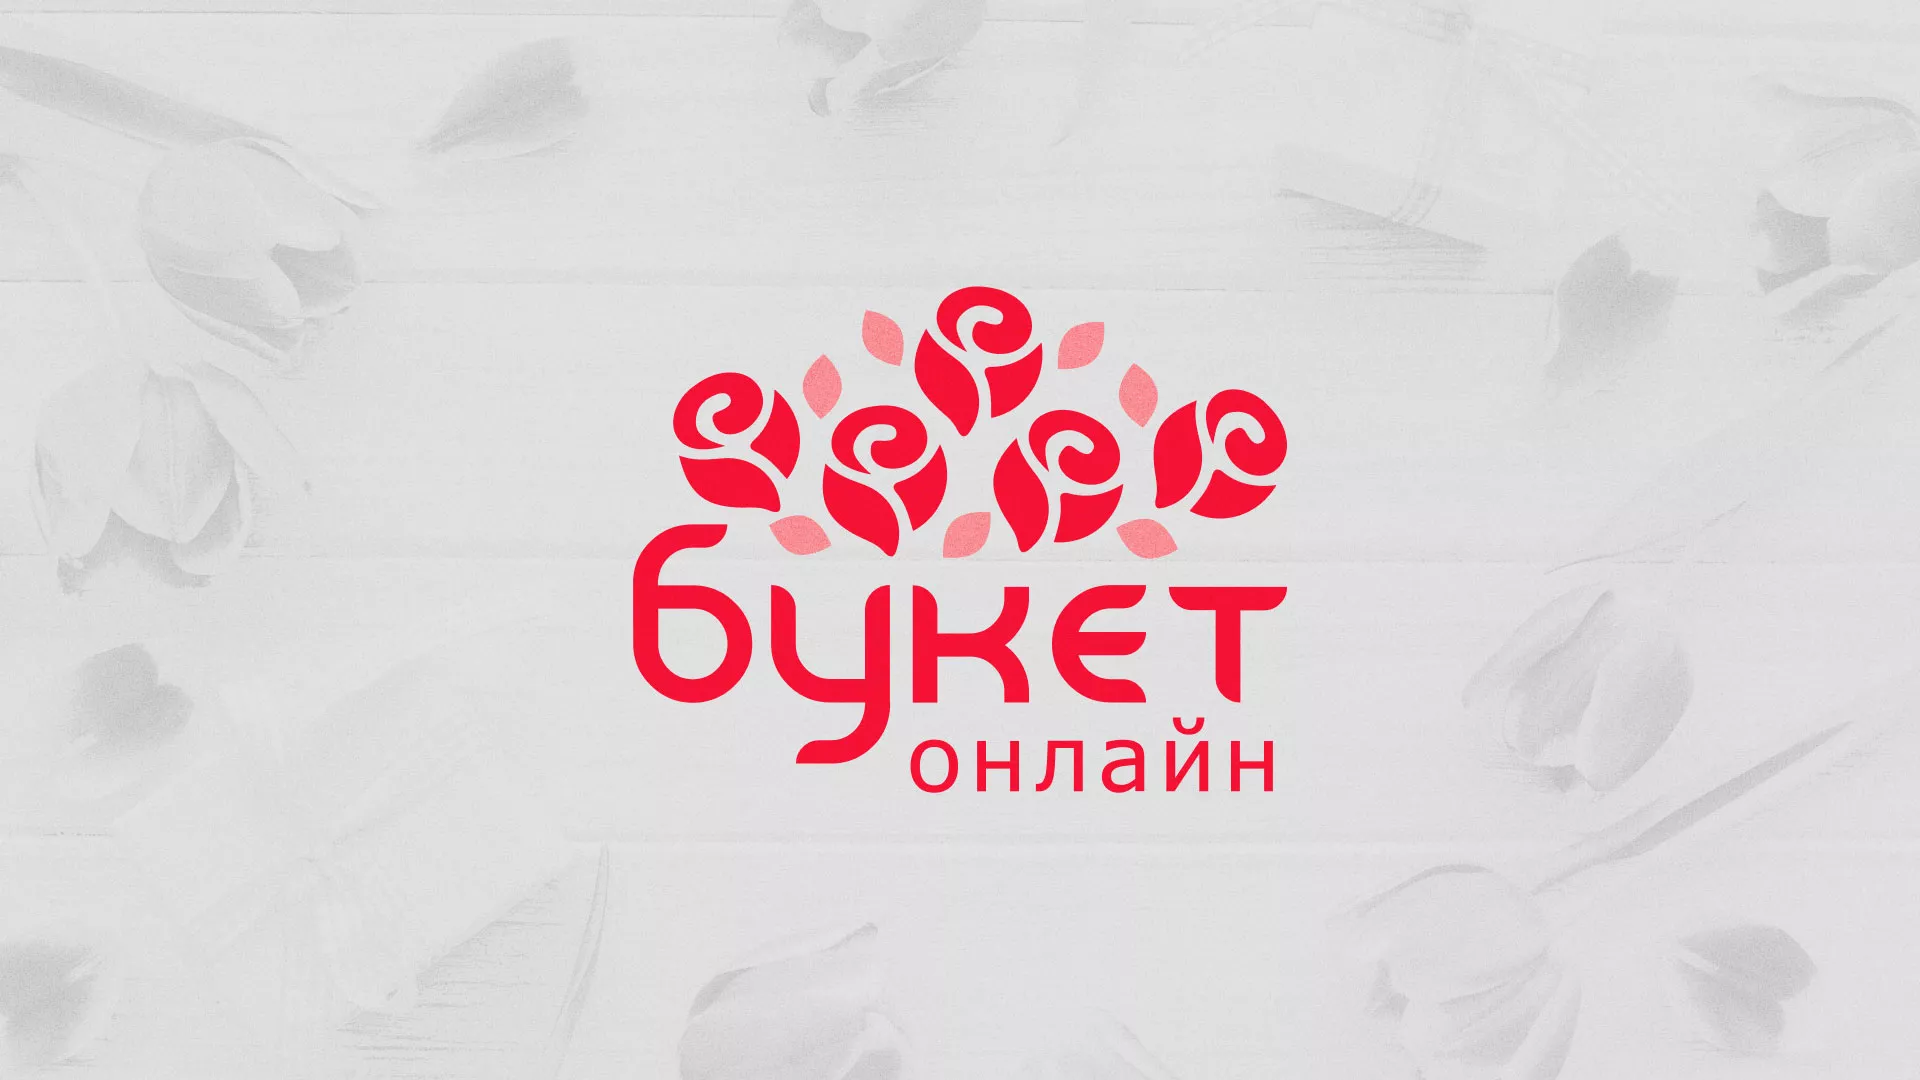 Создание интернет-магазина «Букет-онлайн» по цветам в Бугуруслане